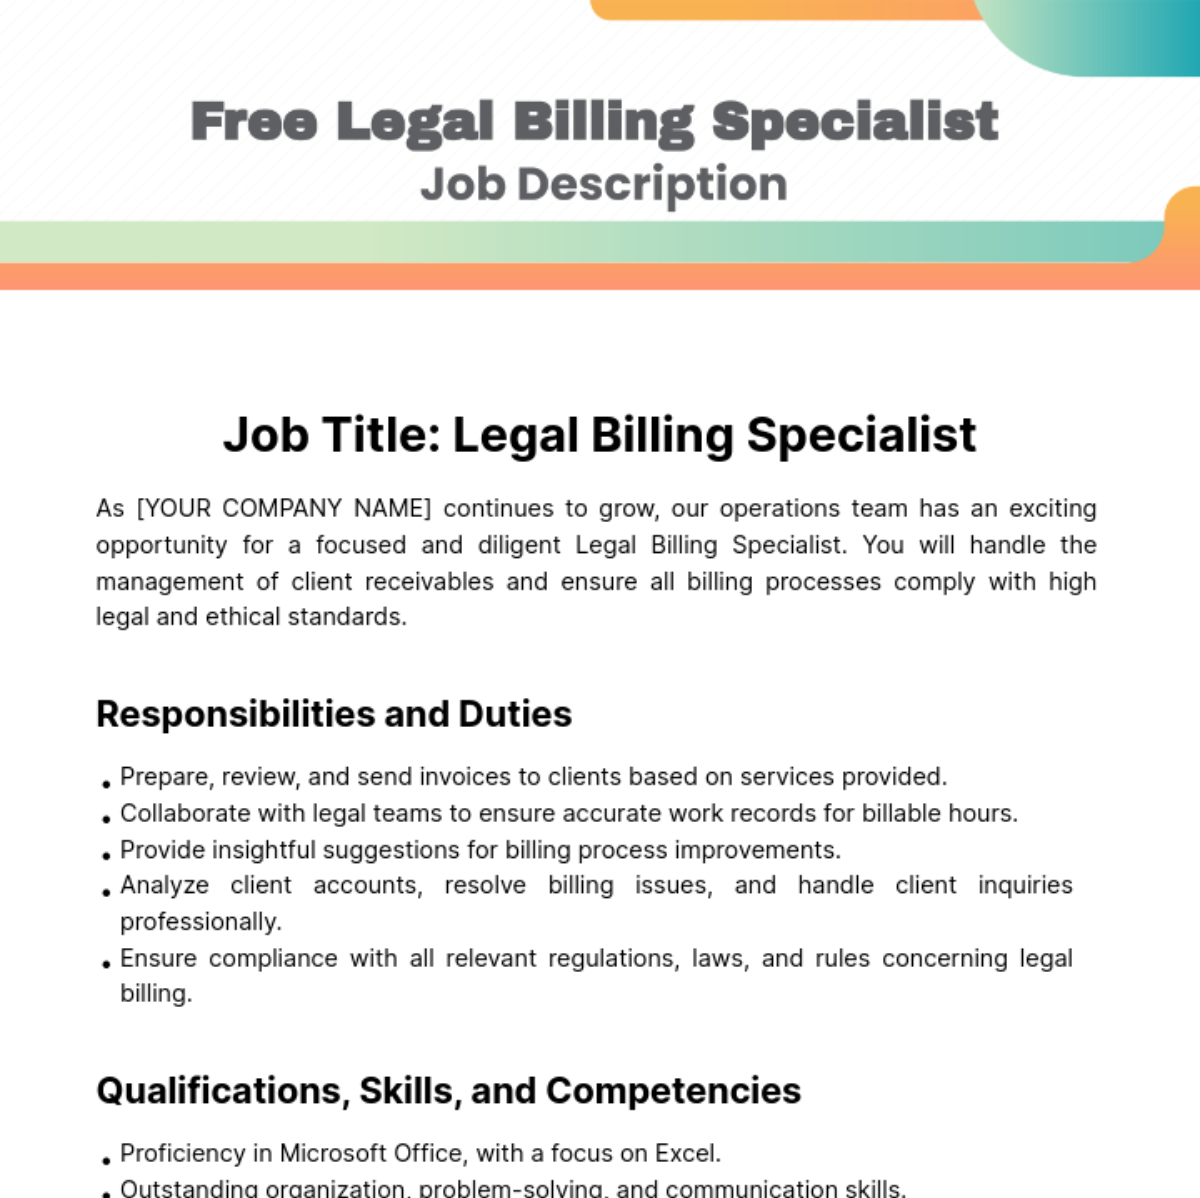 Free Legal Billing Specialist Job Description Template